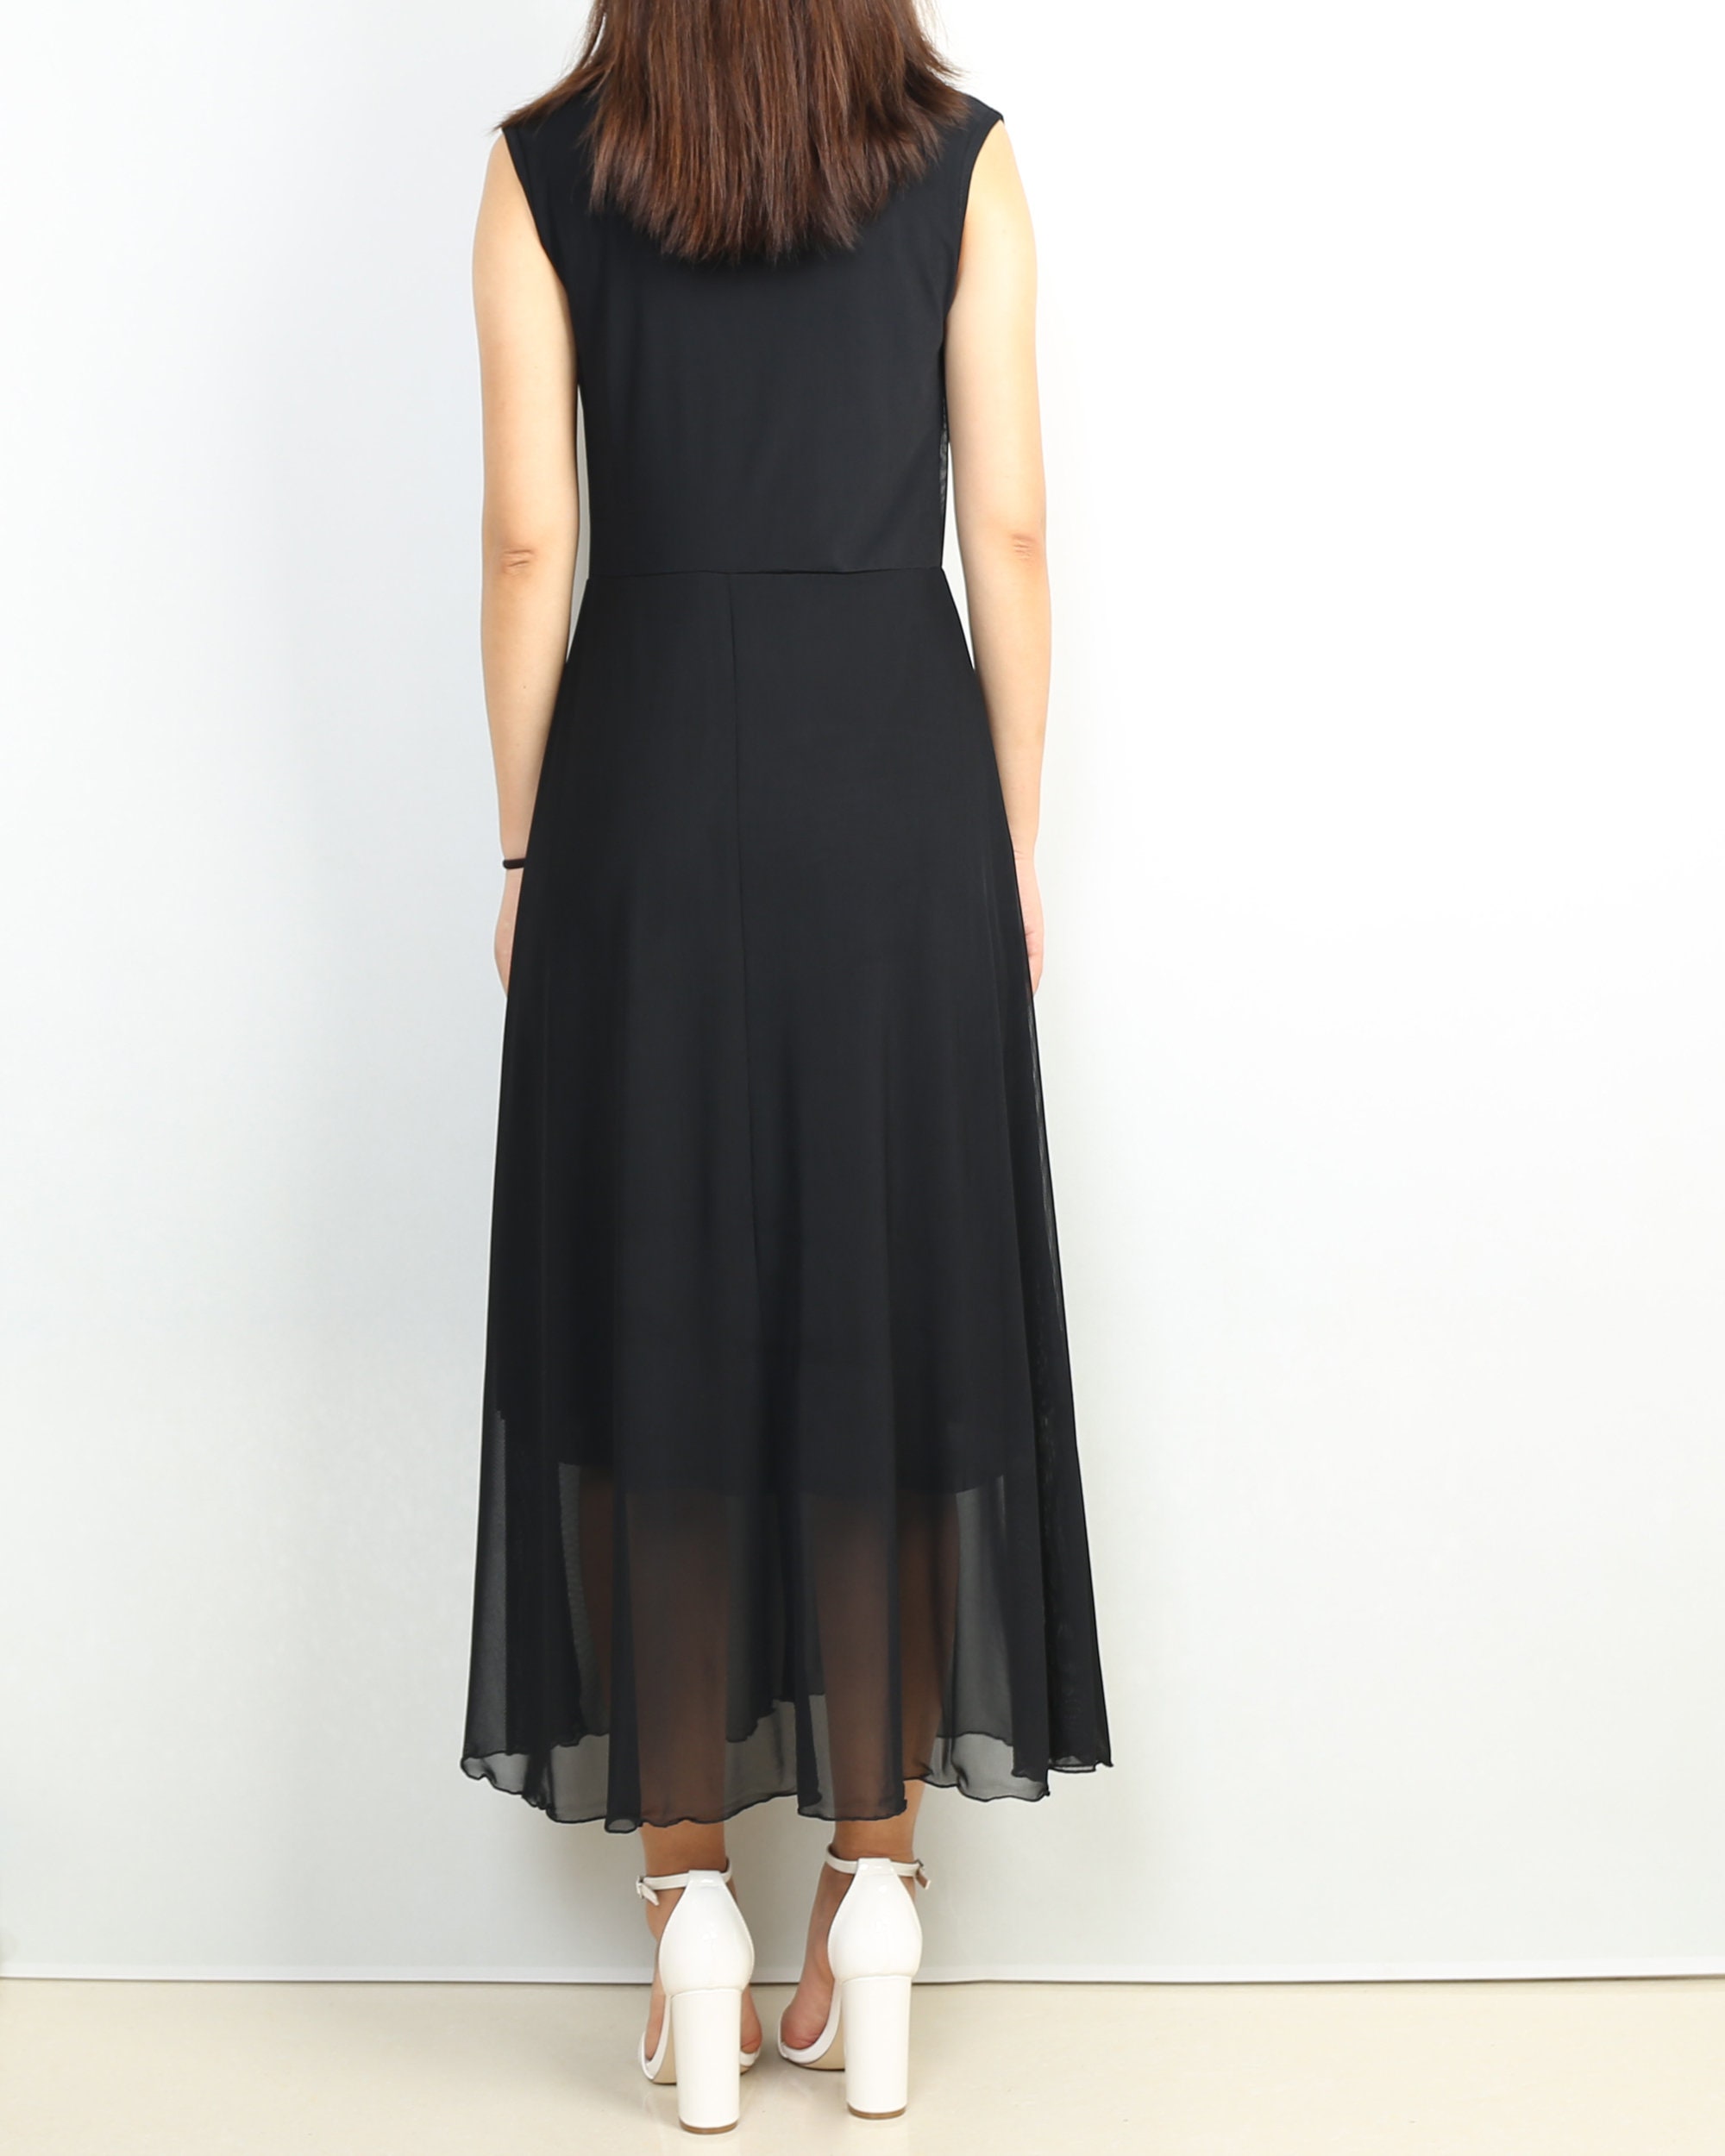 Sleeveless mesh dress see through dress party dress black | Etsy